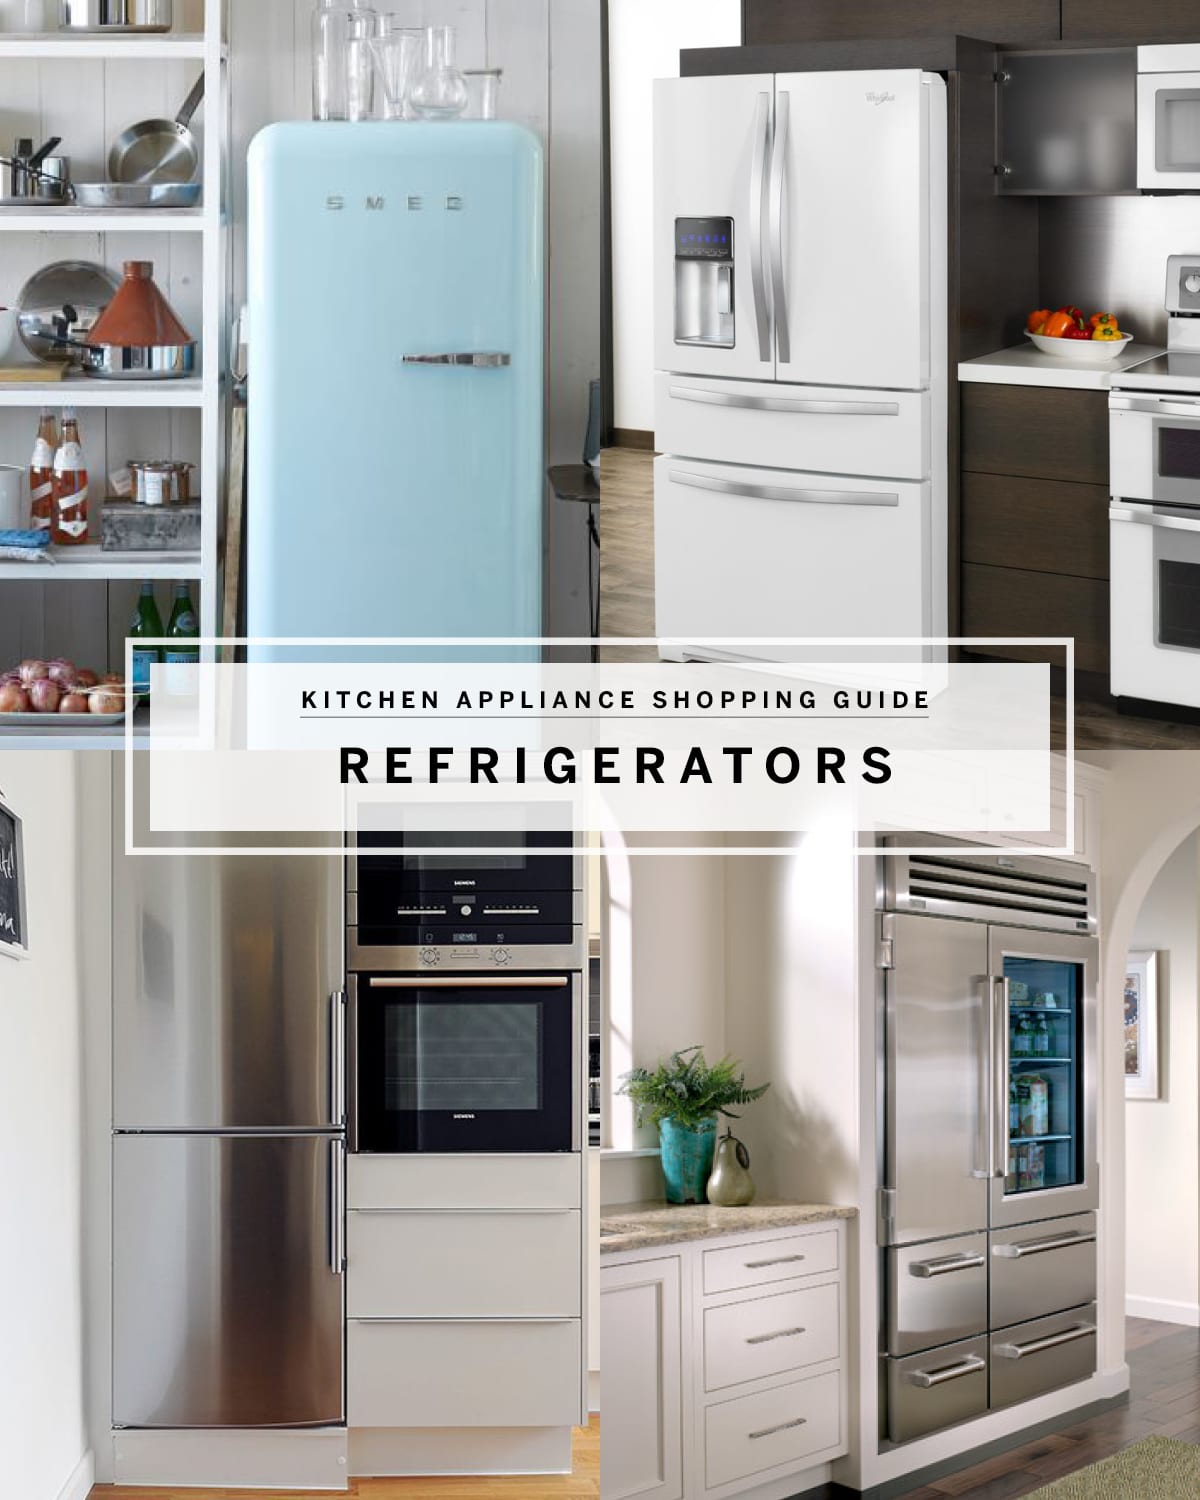 7 cu. ft refrigerator - appliances - by owner - sale - craigslist